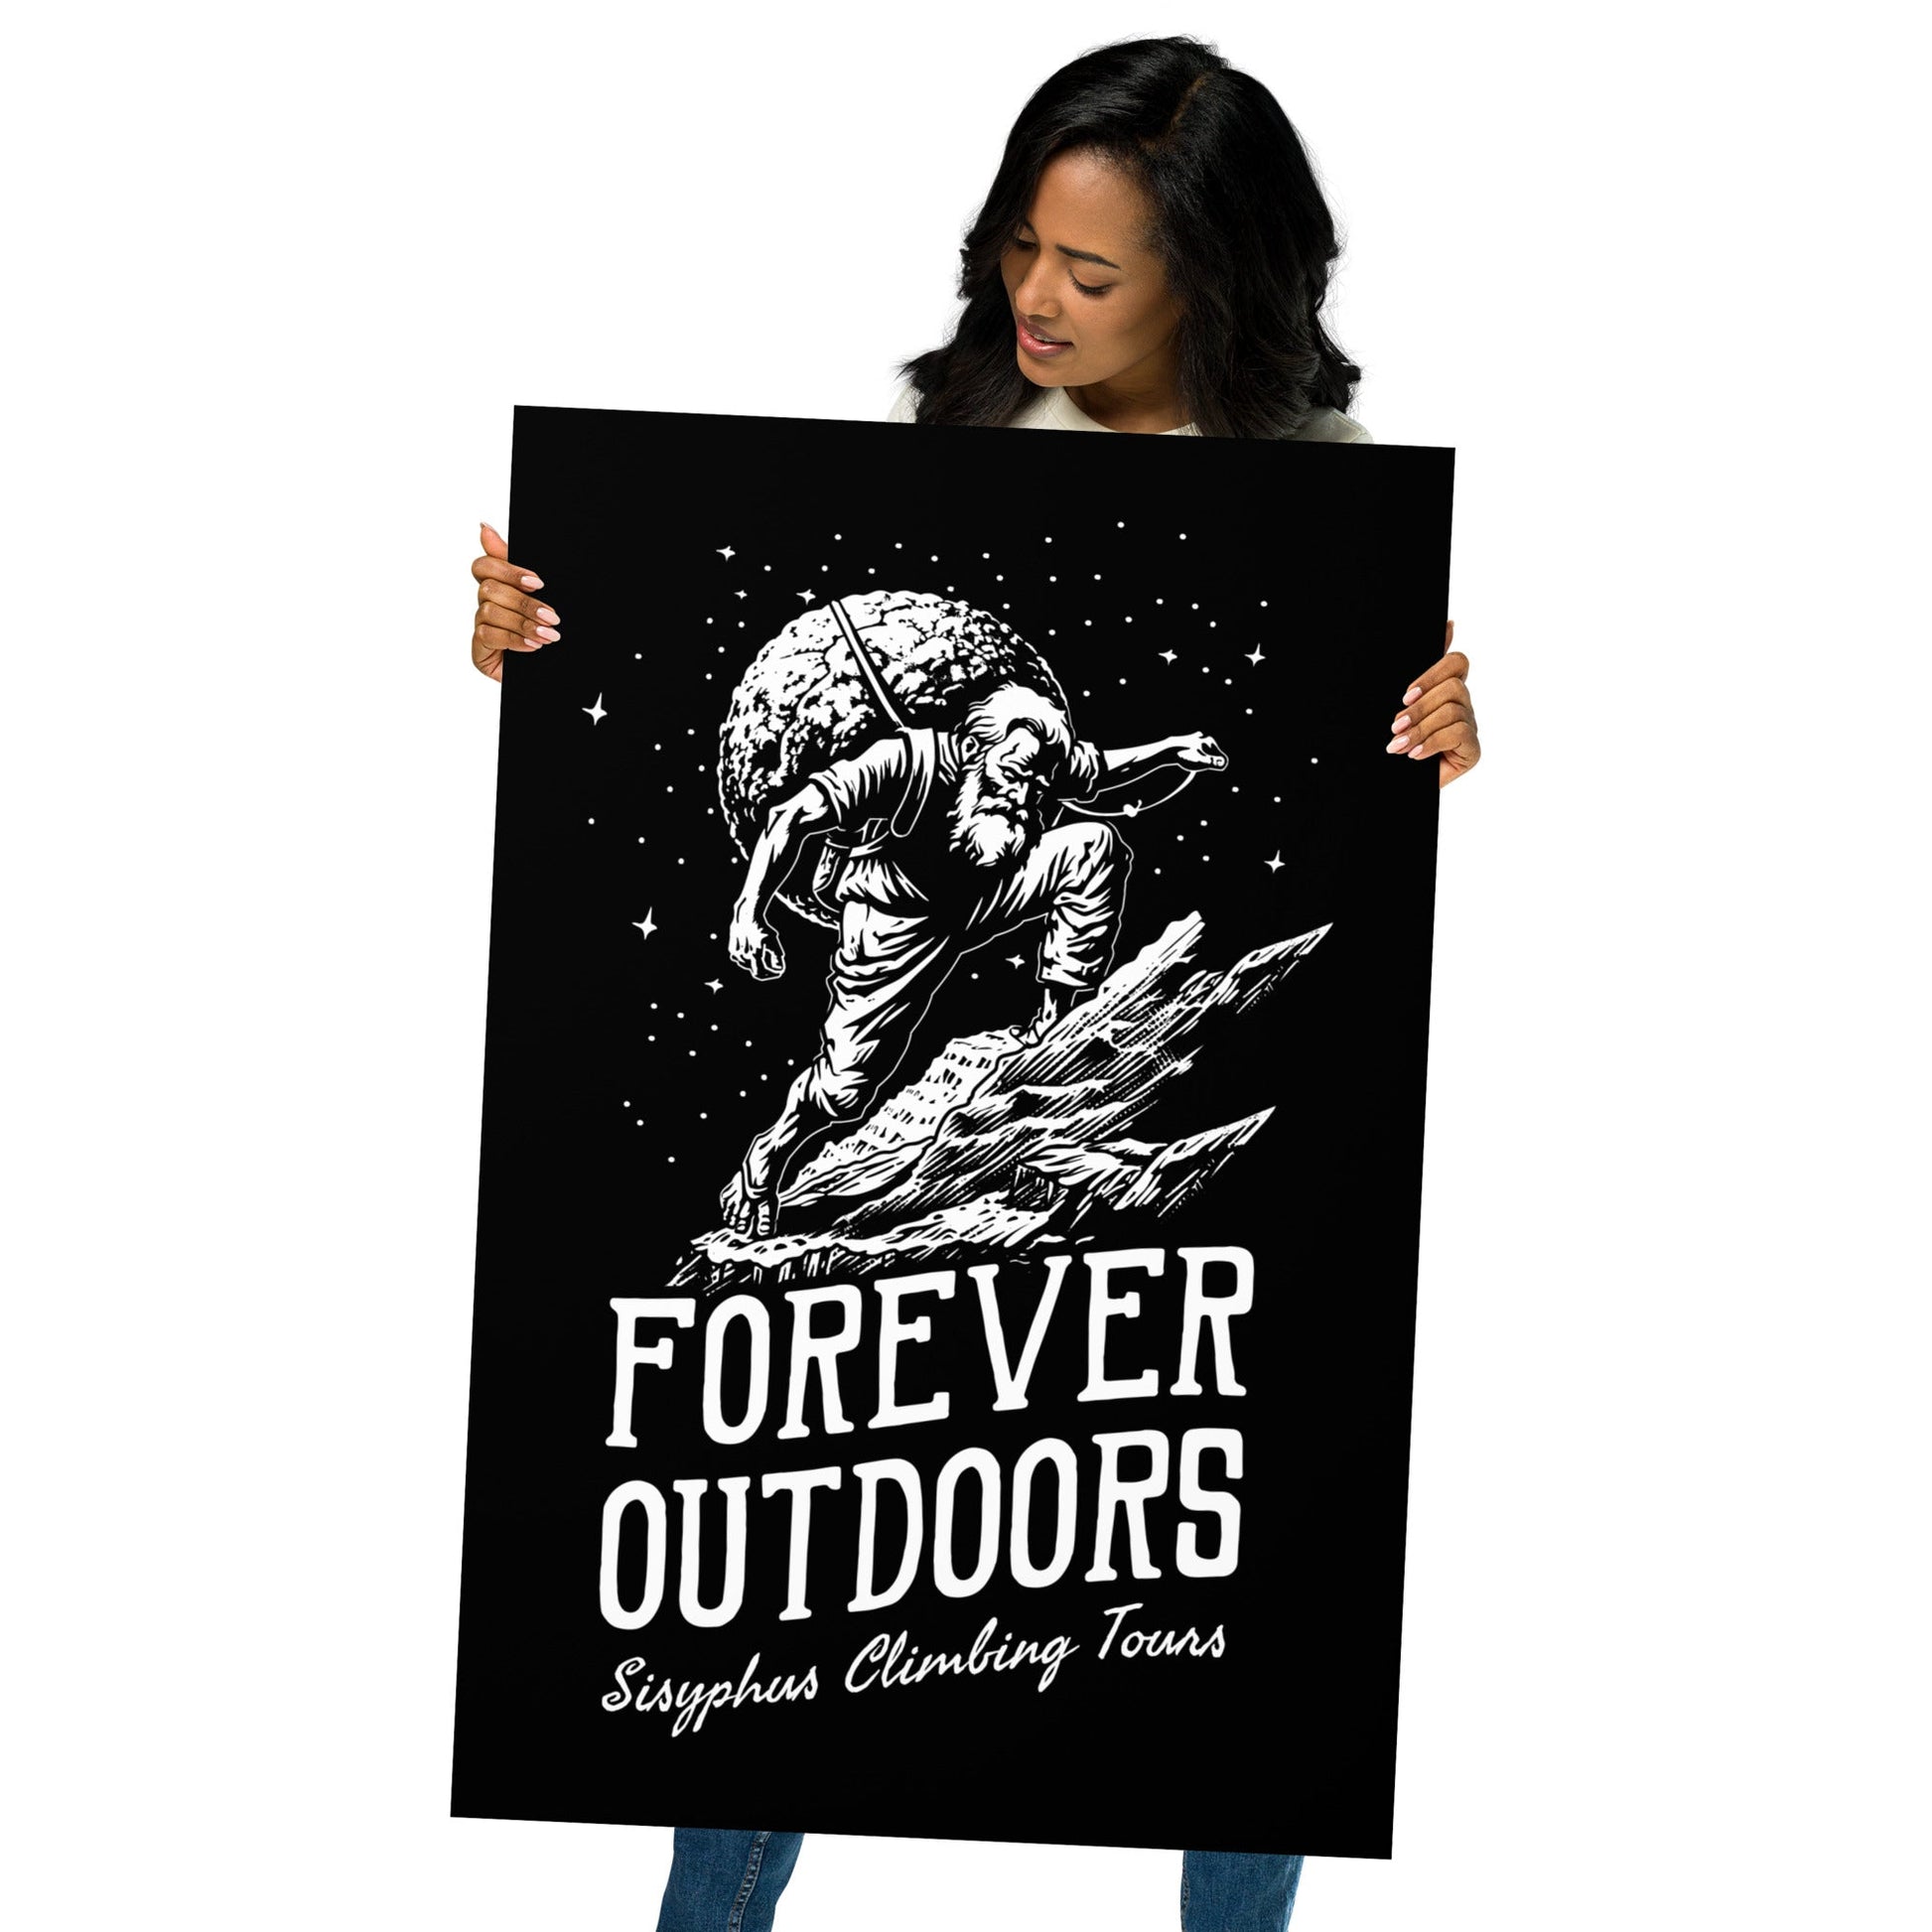 Forever Outdoors - Sisyphus Climbing Tours - Poster